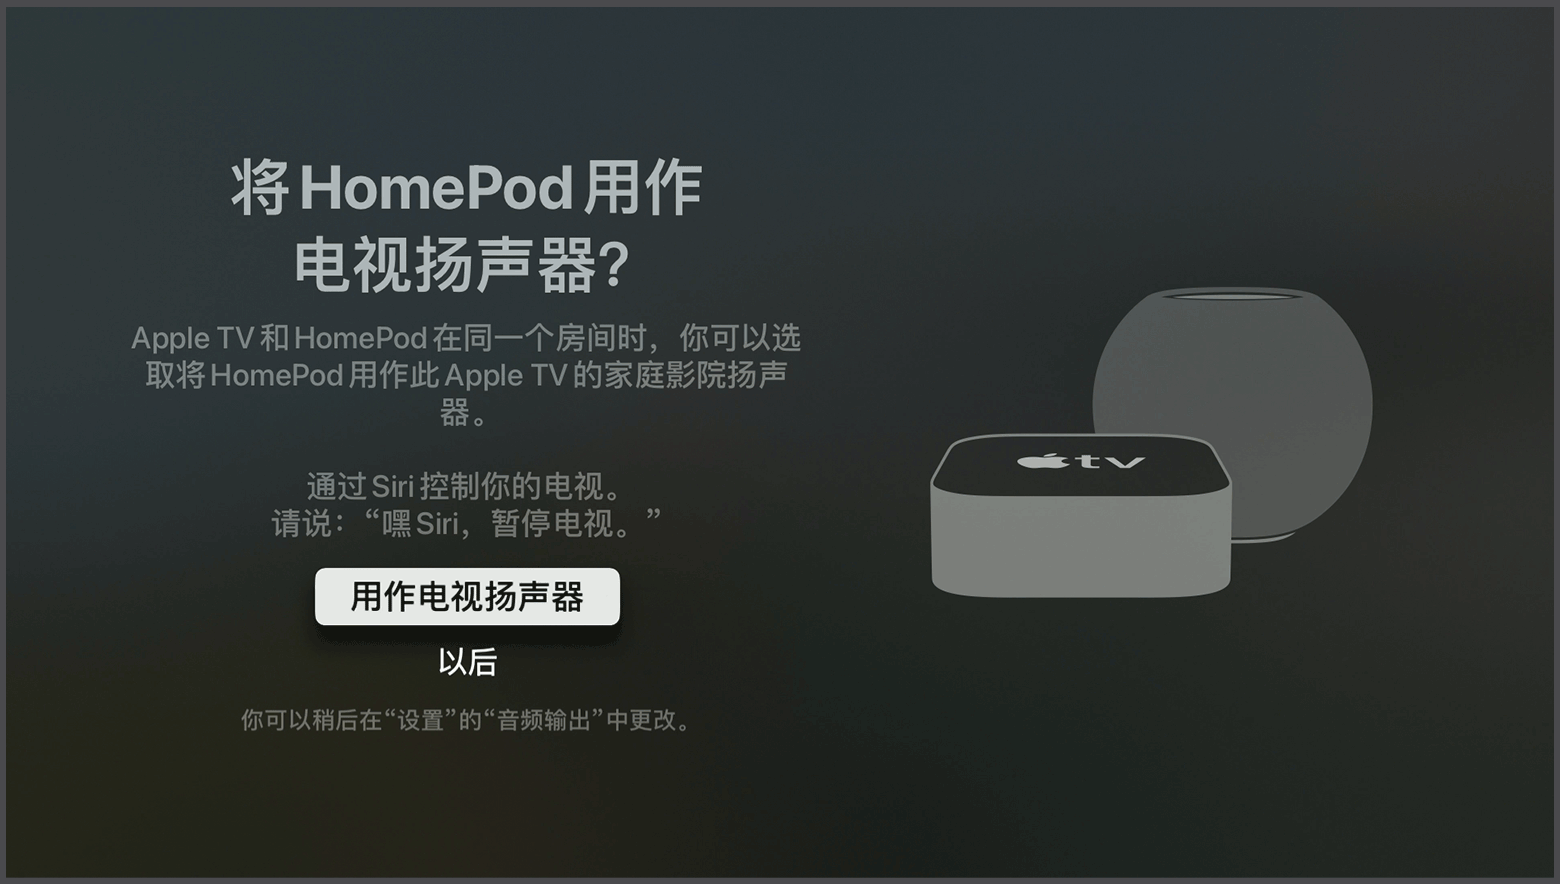 Apple tvOS 截屏显示了有关“将 HomePod 扬声器用作 Apple TV 扬声器”的提示